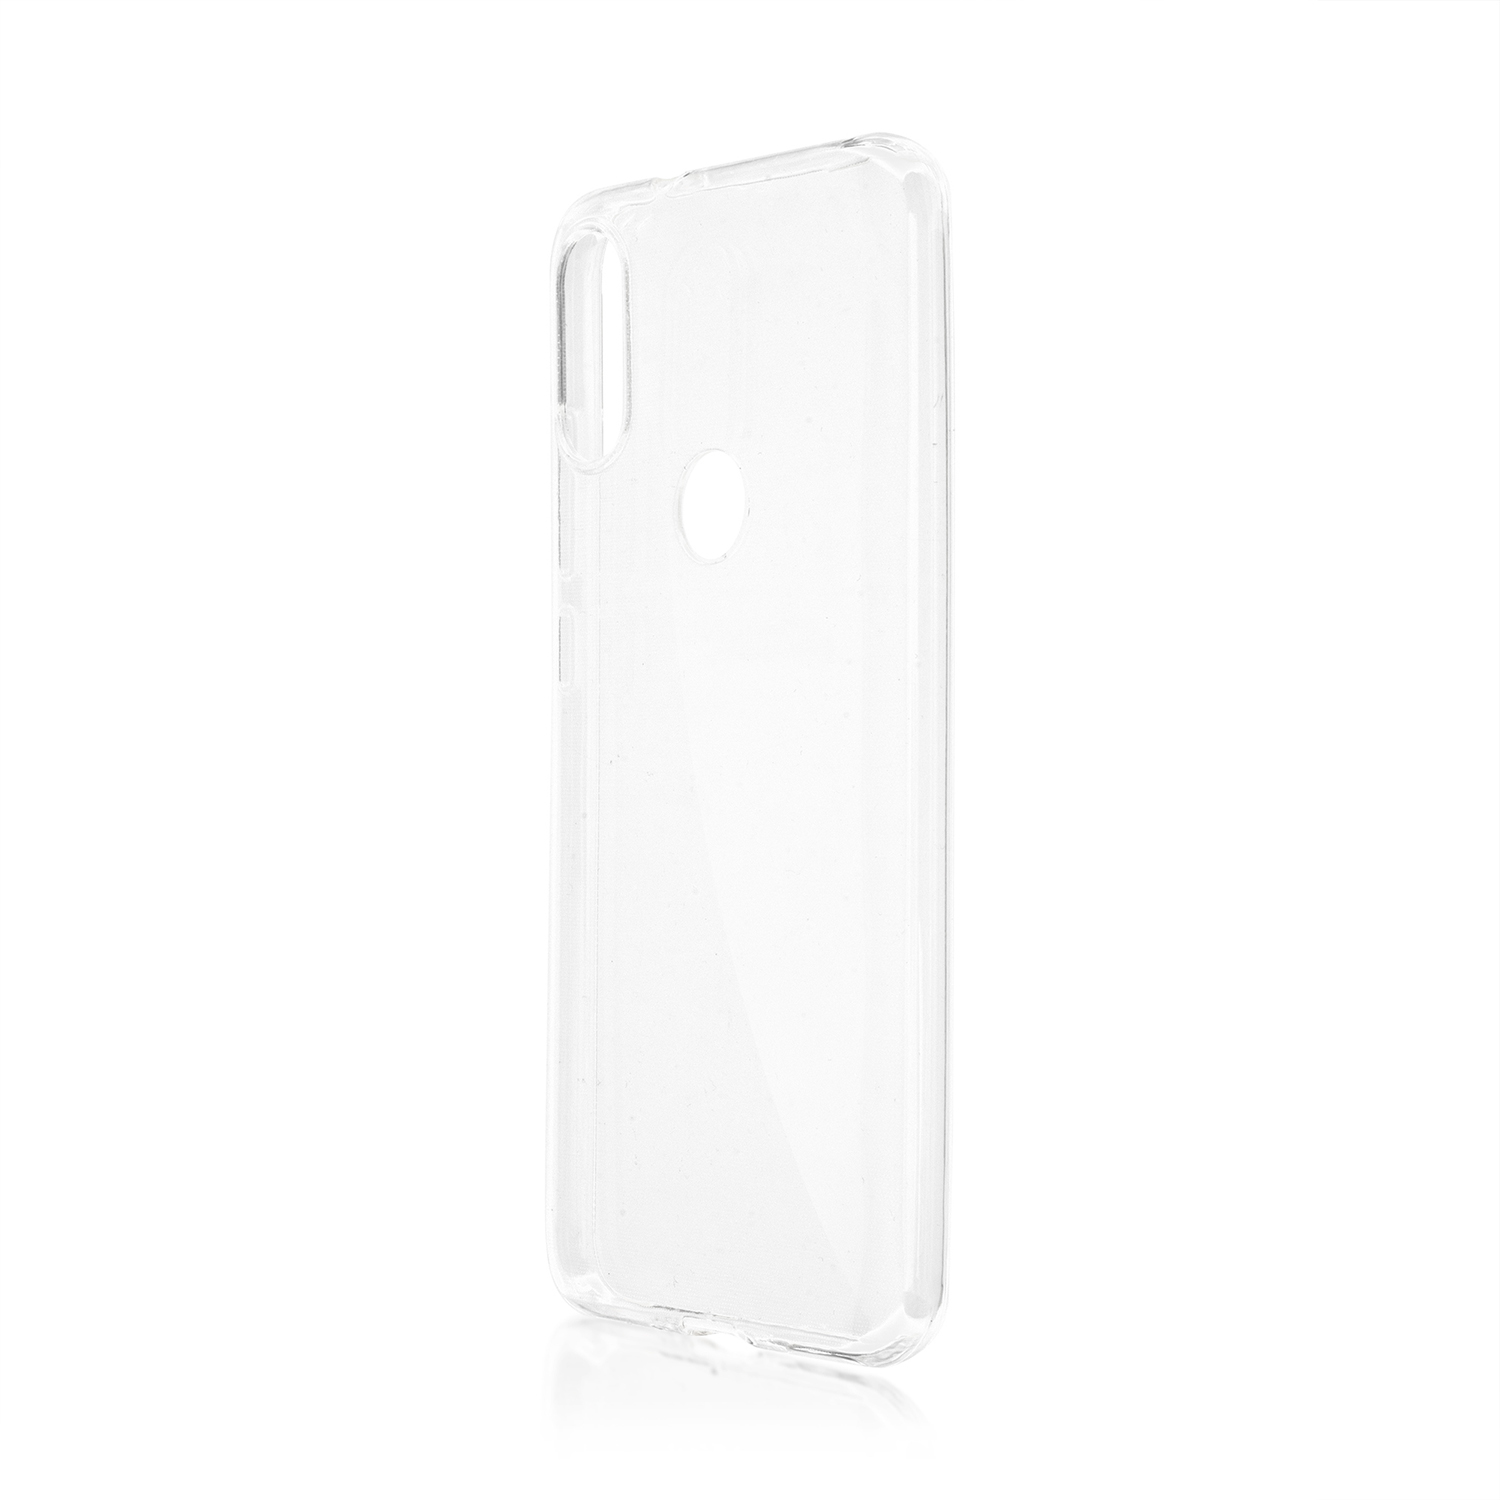 Силиконовый чехол BoraSCO для Xiaomi Mi Play прозрачный силиконовый чехол на xiaomi mi play волна для сяоми ми плей